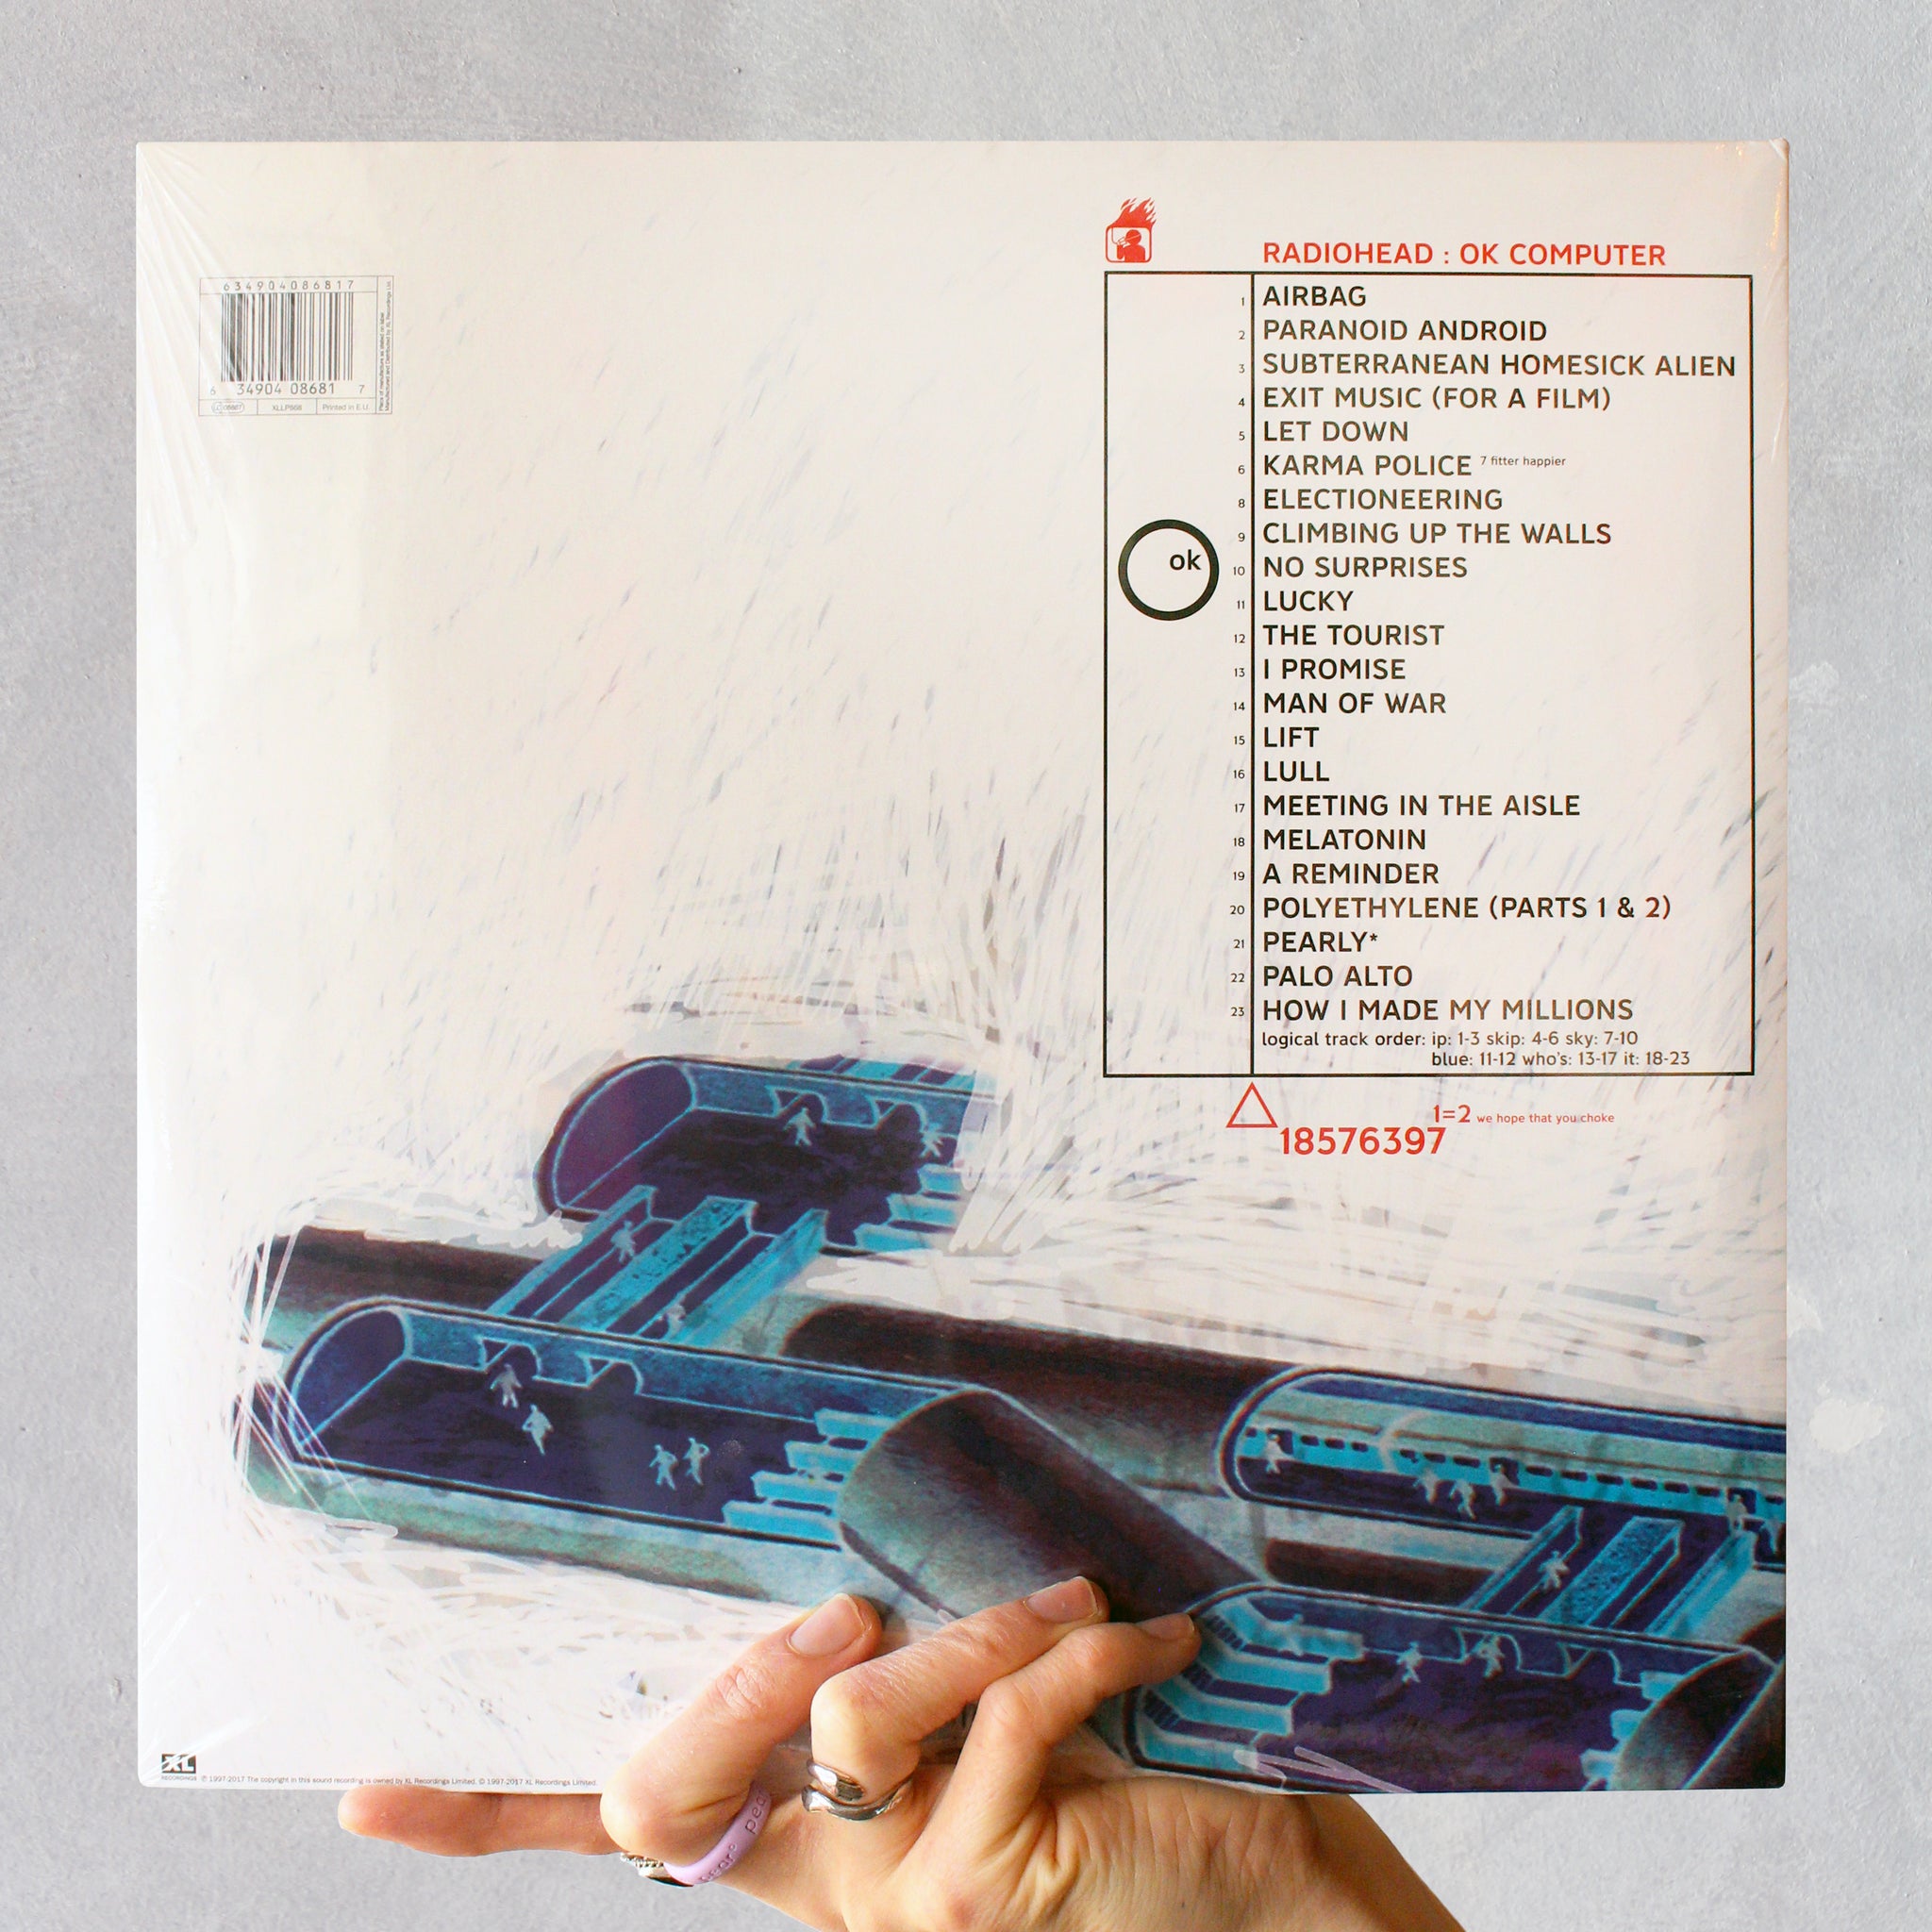 Radiohead - OK Computer 180g Triple LP - Audio Architect Apparel